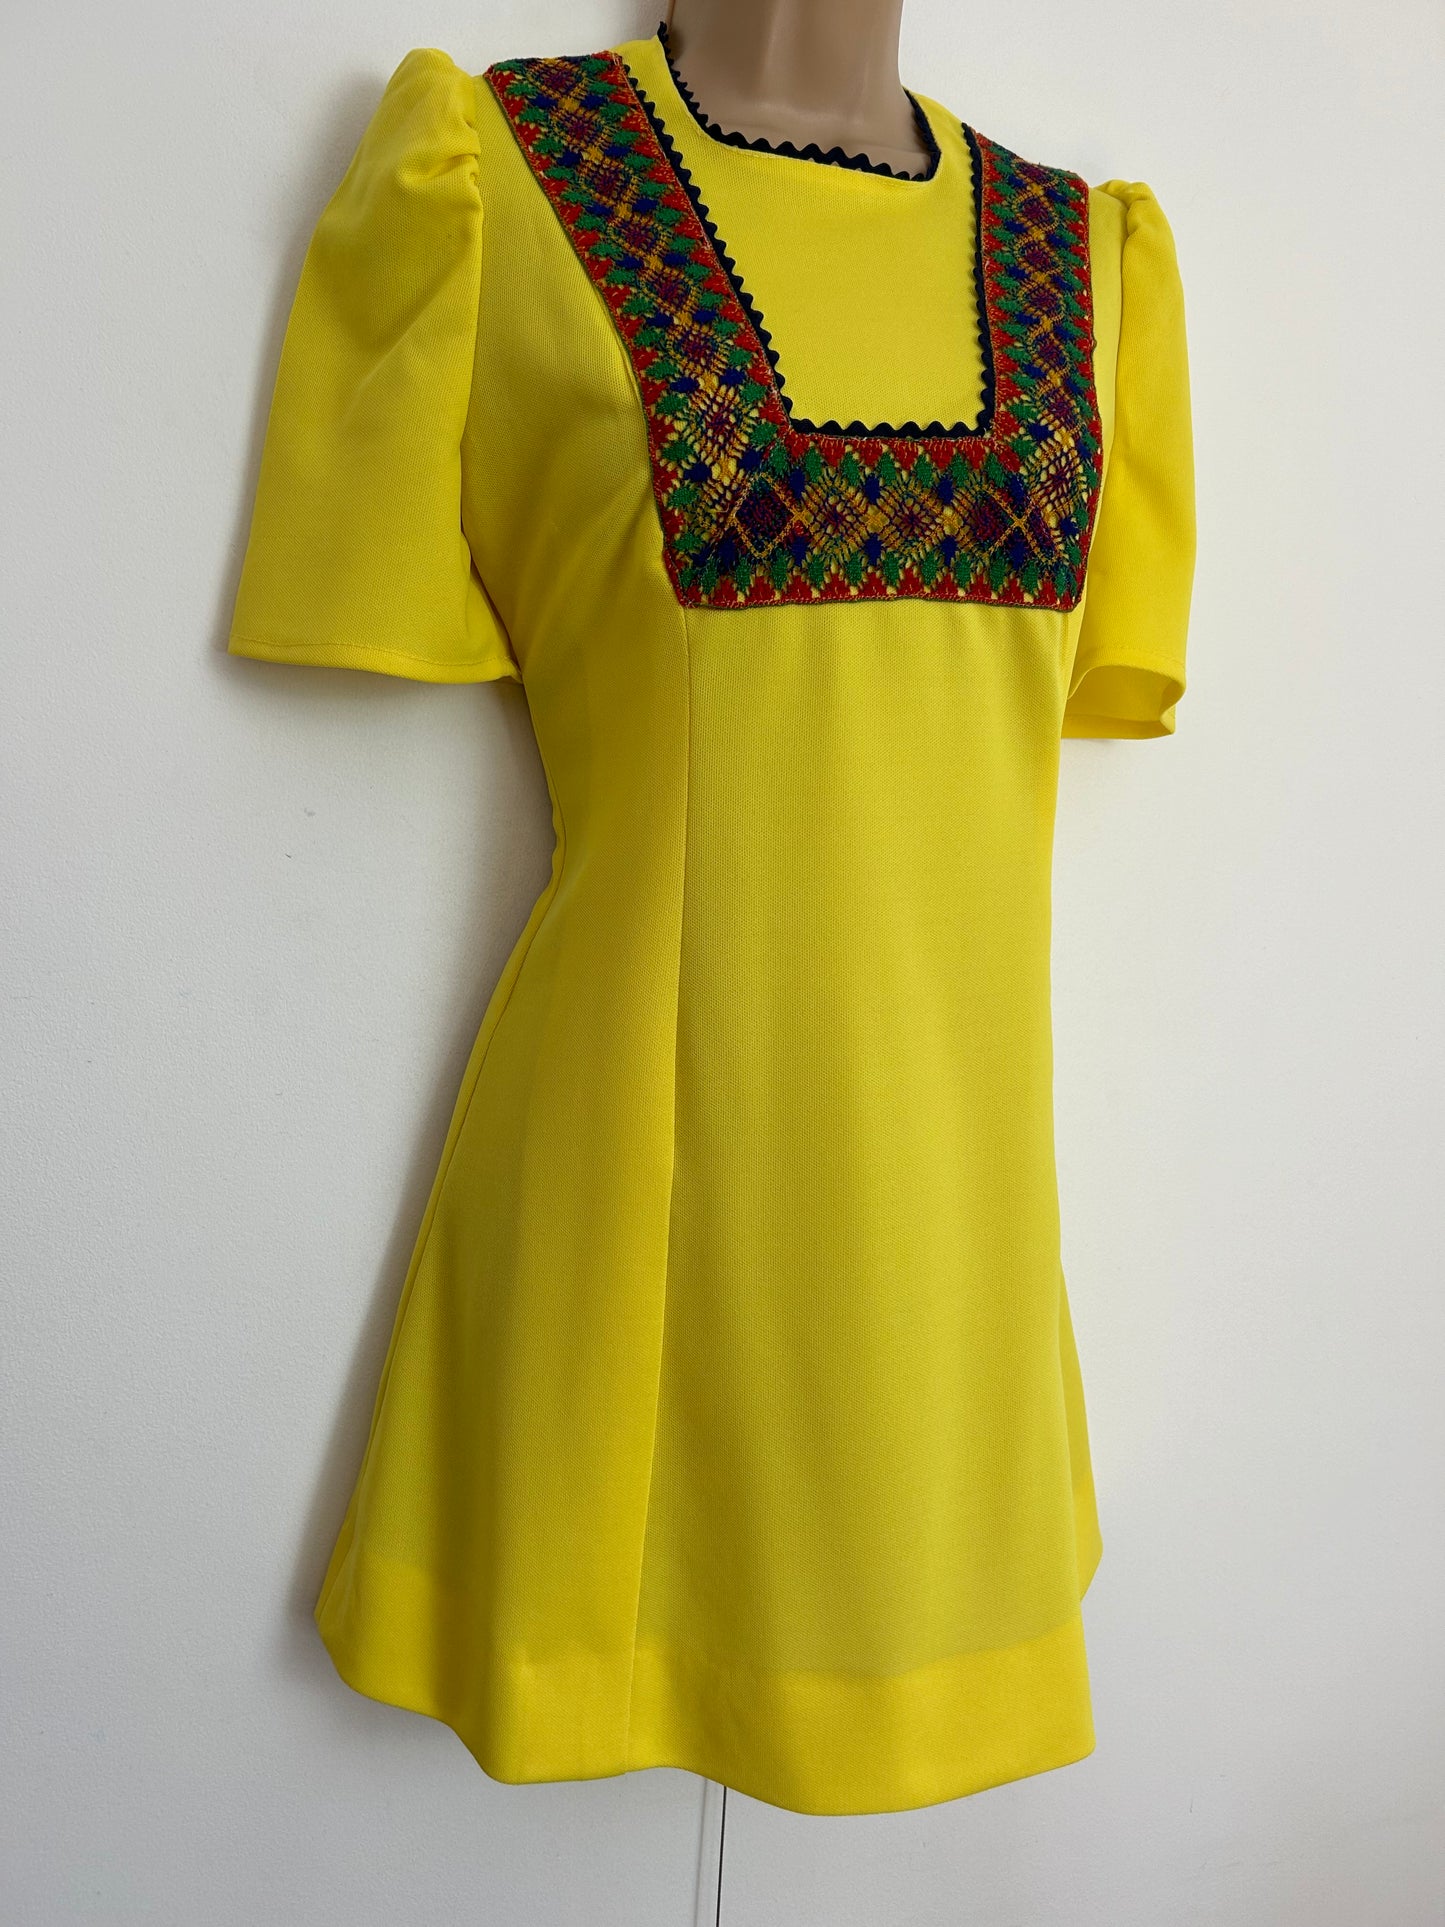 Vintage 1960s UK Size 8-10 Mod Dolly Yellow Crochet & Ric Rac Trim Mini Shift Dress